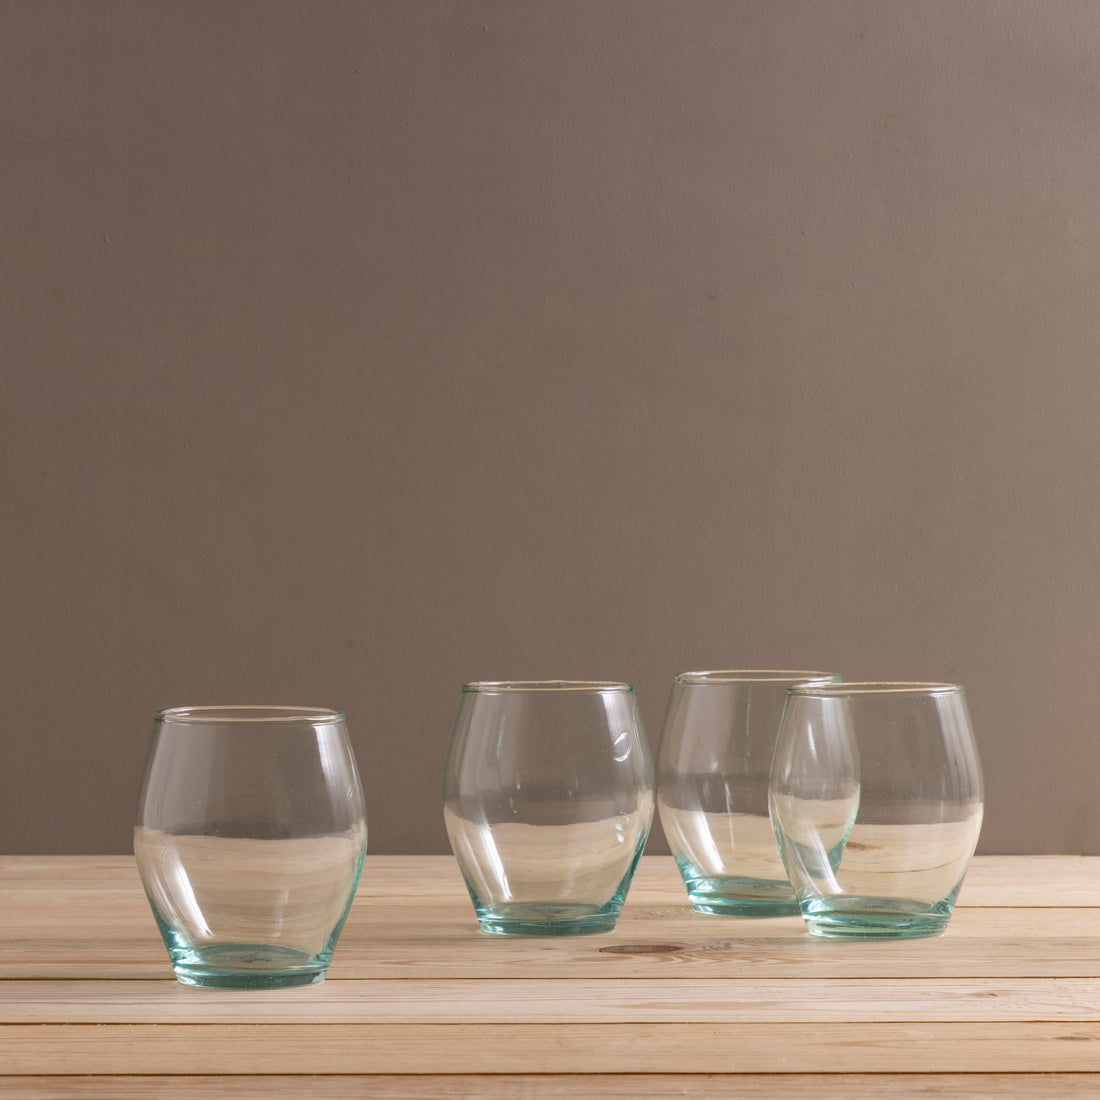 Northwoods Bear Stemless Wine Glasses - Set of 4